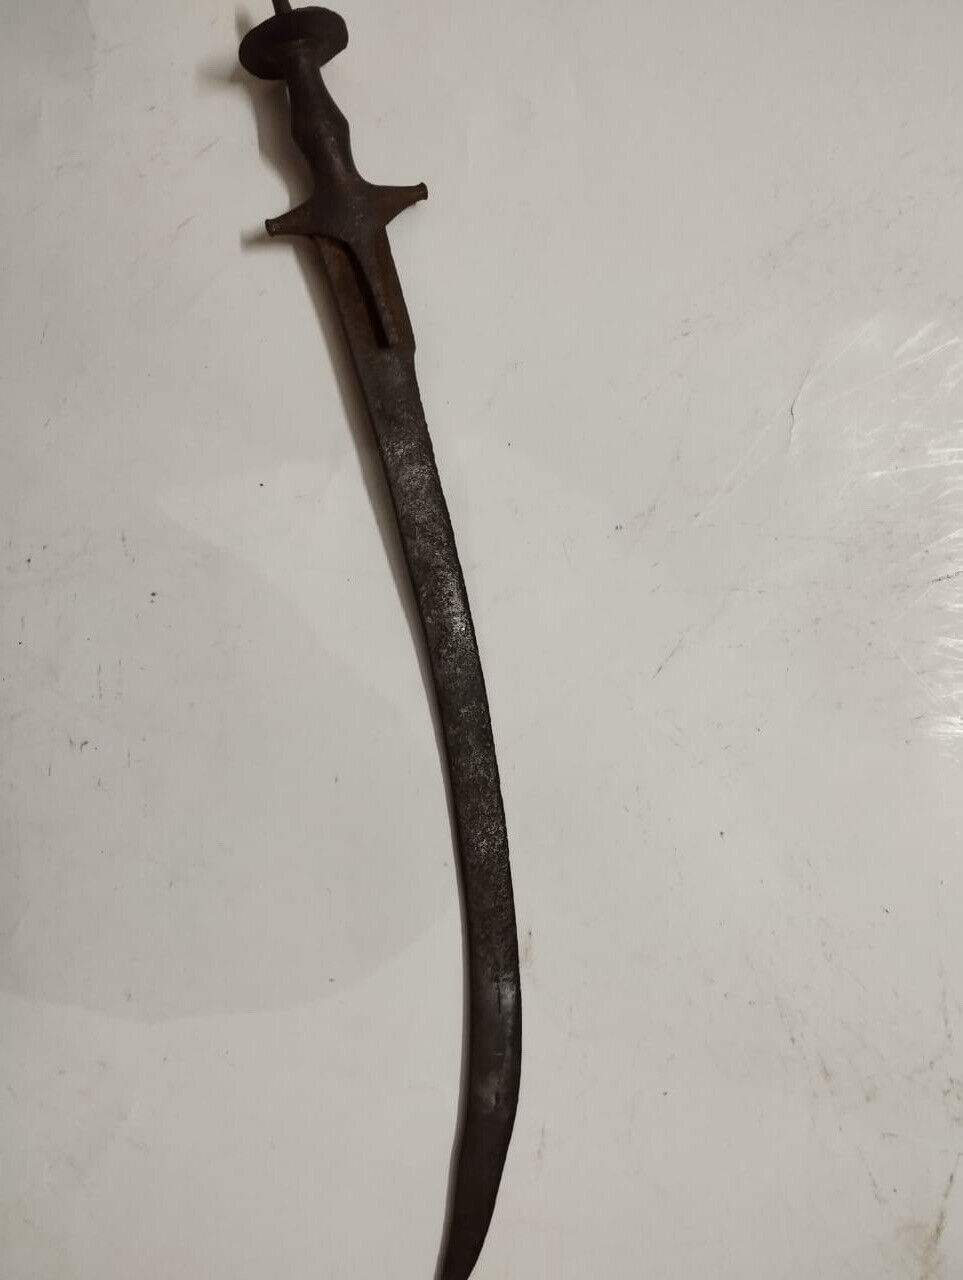 Sabre Shamshir 1904 Antique Wootz Sword    Vintage Old Rare Collectible